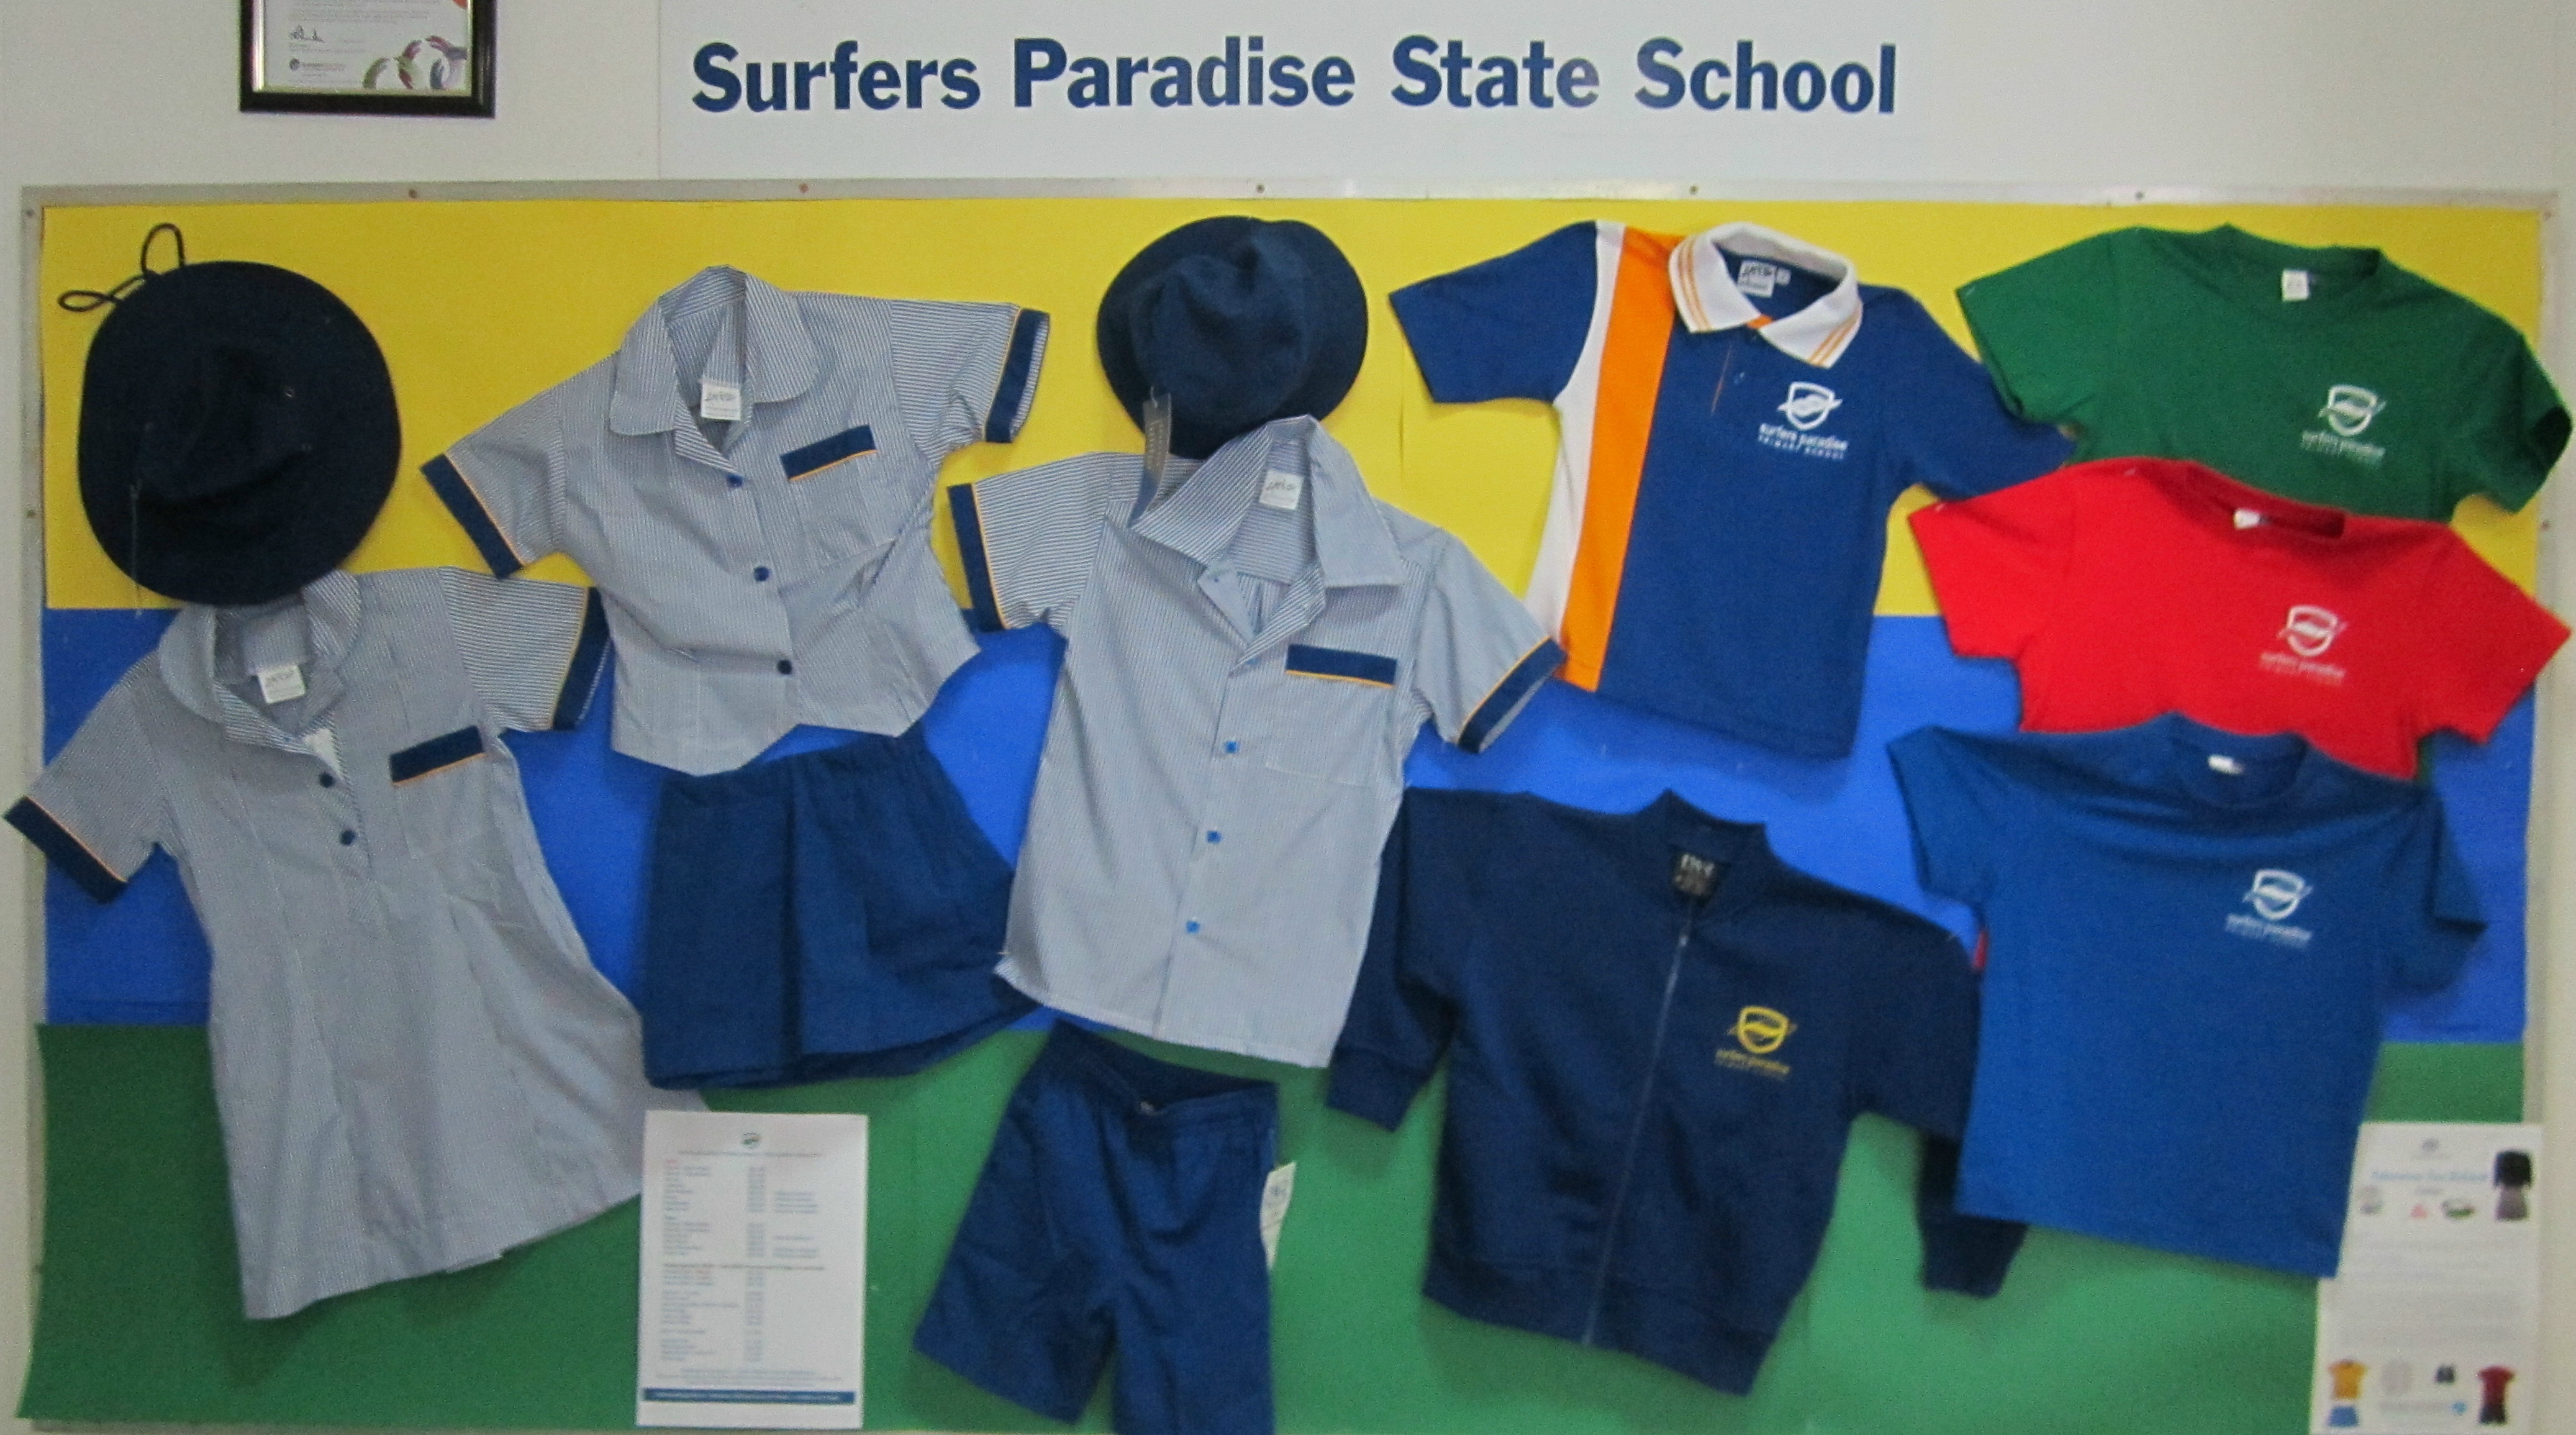 Surfers Paradise State School uniforms